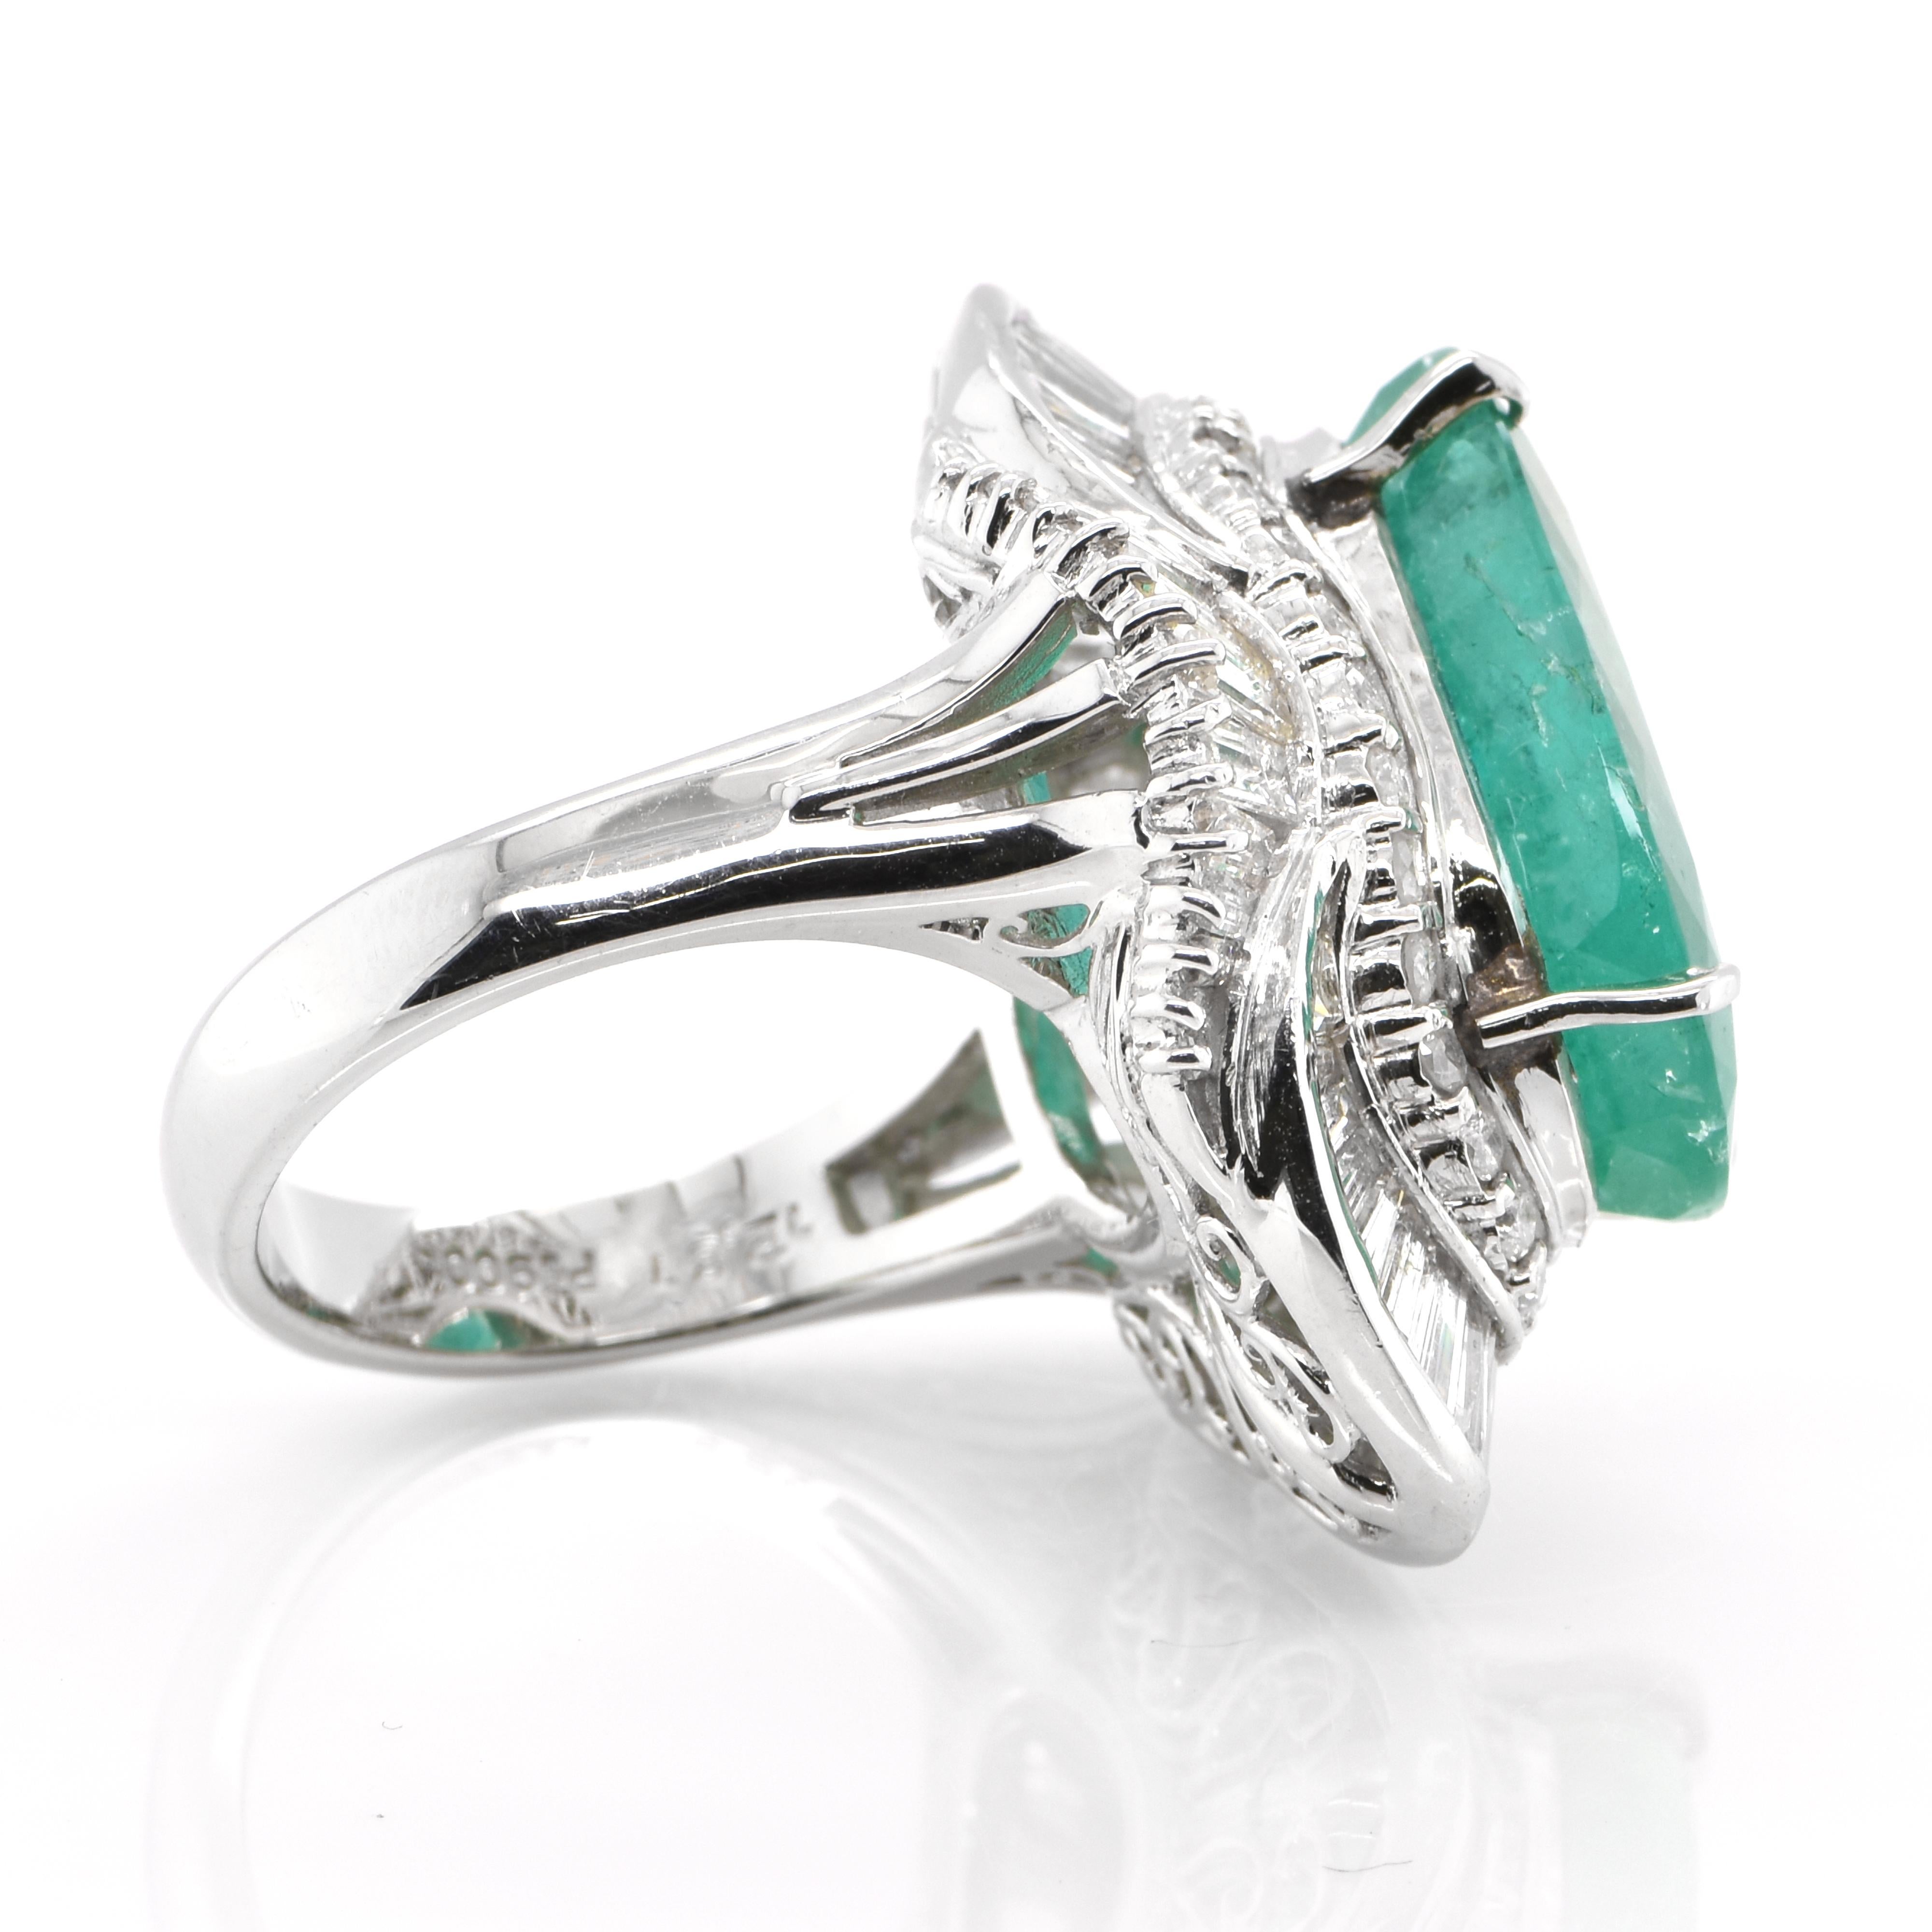 Oval Cut 12.81 Carat Natural Emerald and Diamond Ballerina Ring Set in Platinum